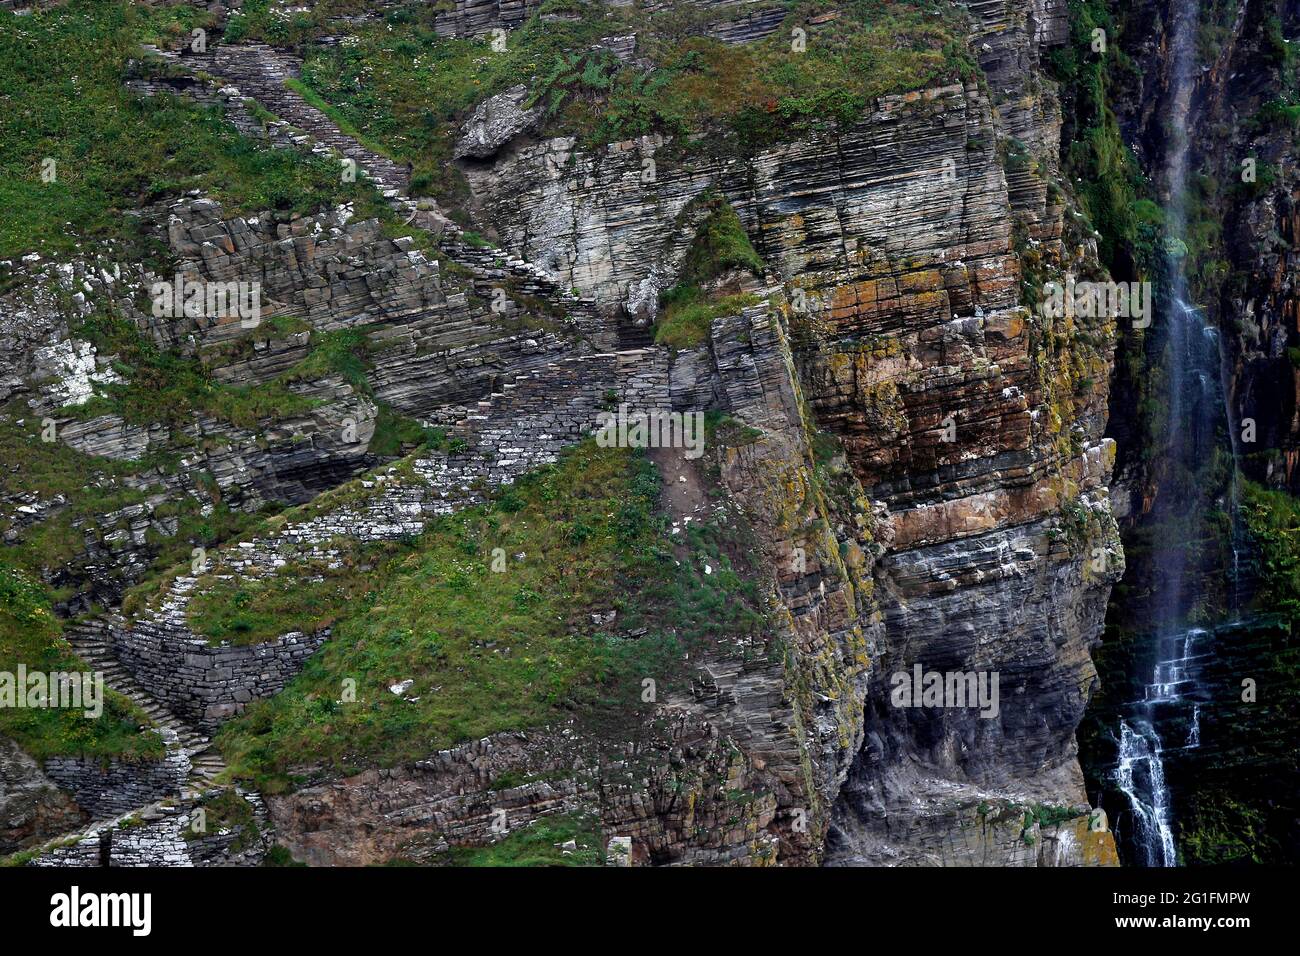 Cliff, Rocky coast, Stairs, Waterfall, Coast, Whaligoe Steps, Wick, North east coast, Highlands, Highland, Scotland, Great Britain Stock Photo